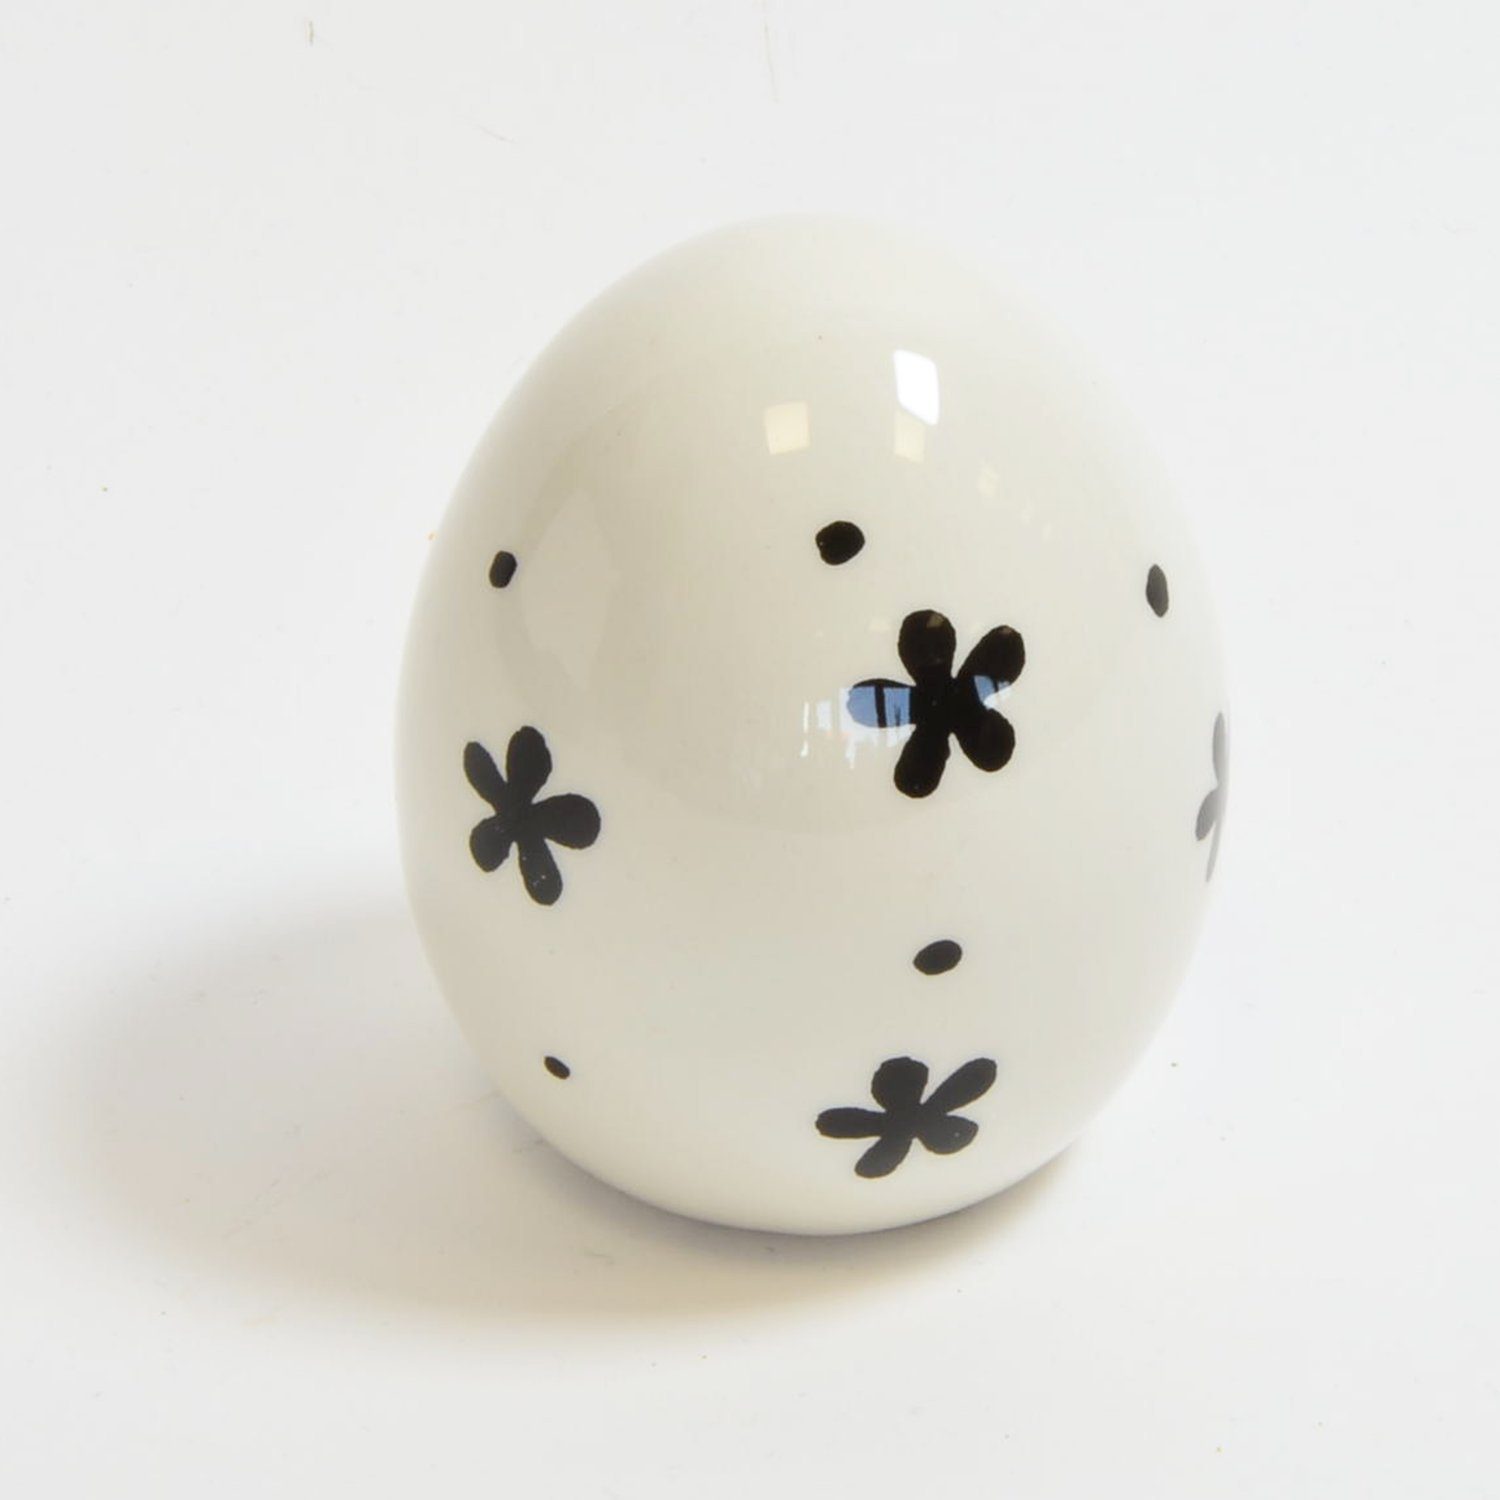 Posiwio Dekofigur Deko Ei Osterfigur weiß-schwarz aus Keramik H 12,5 cm